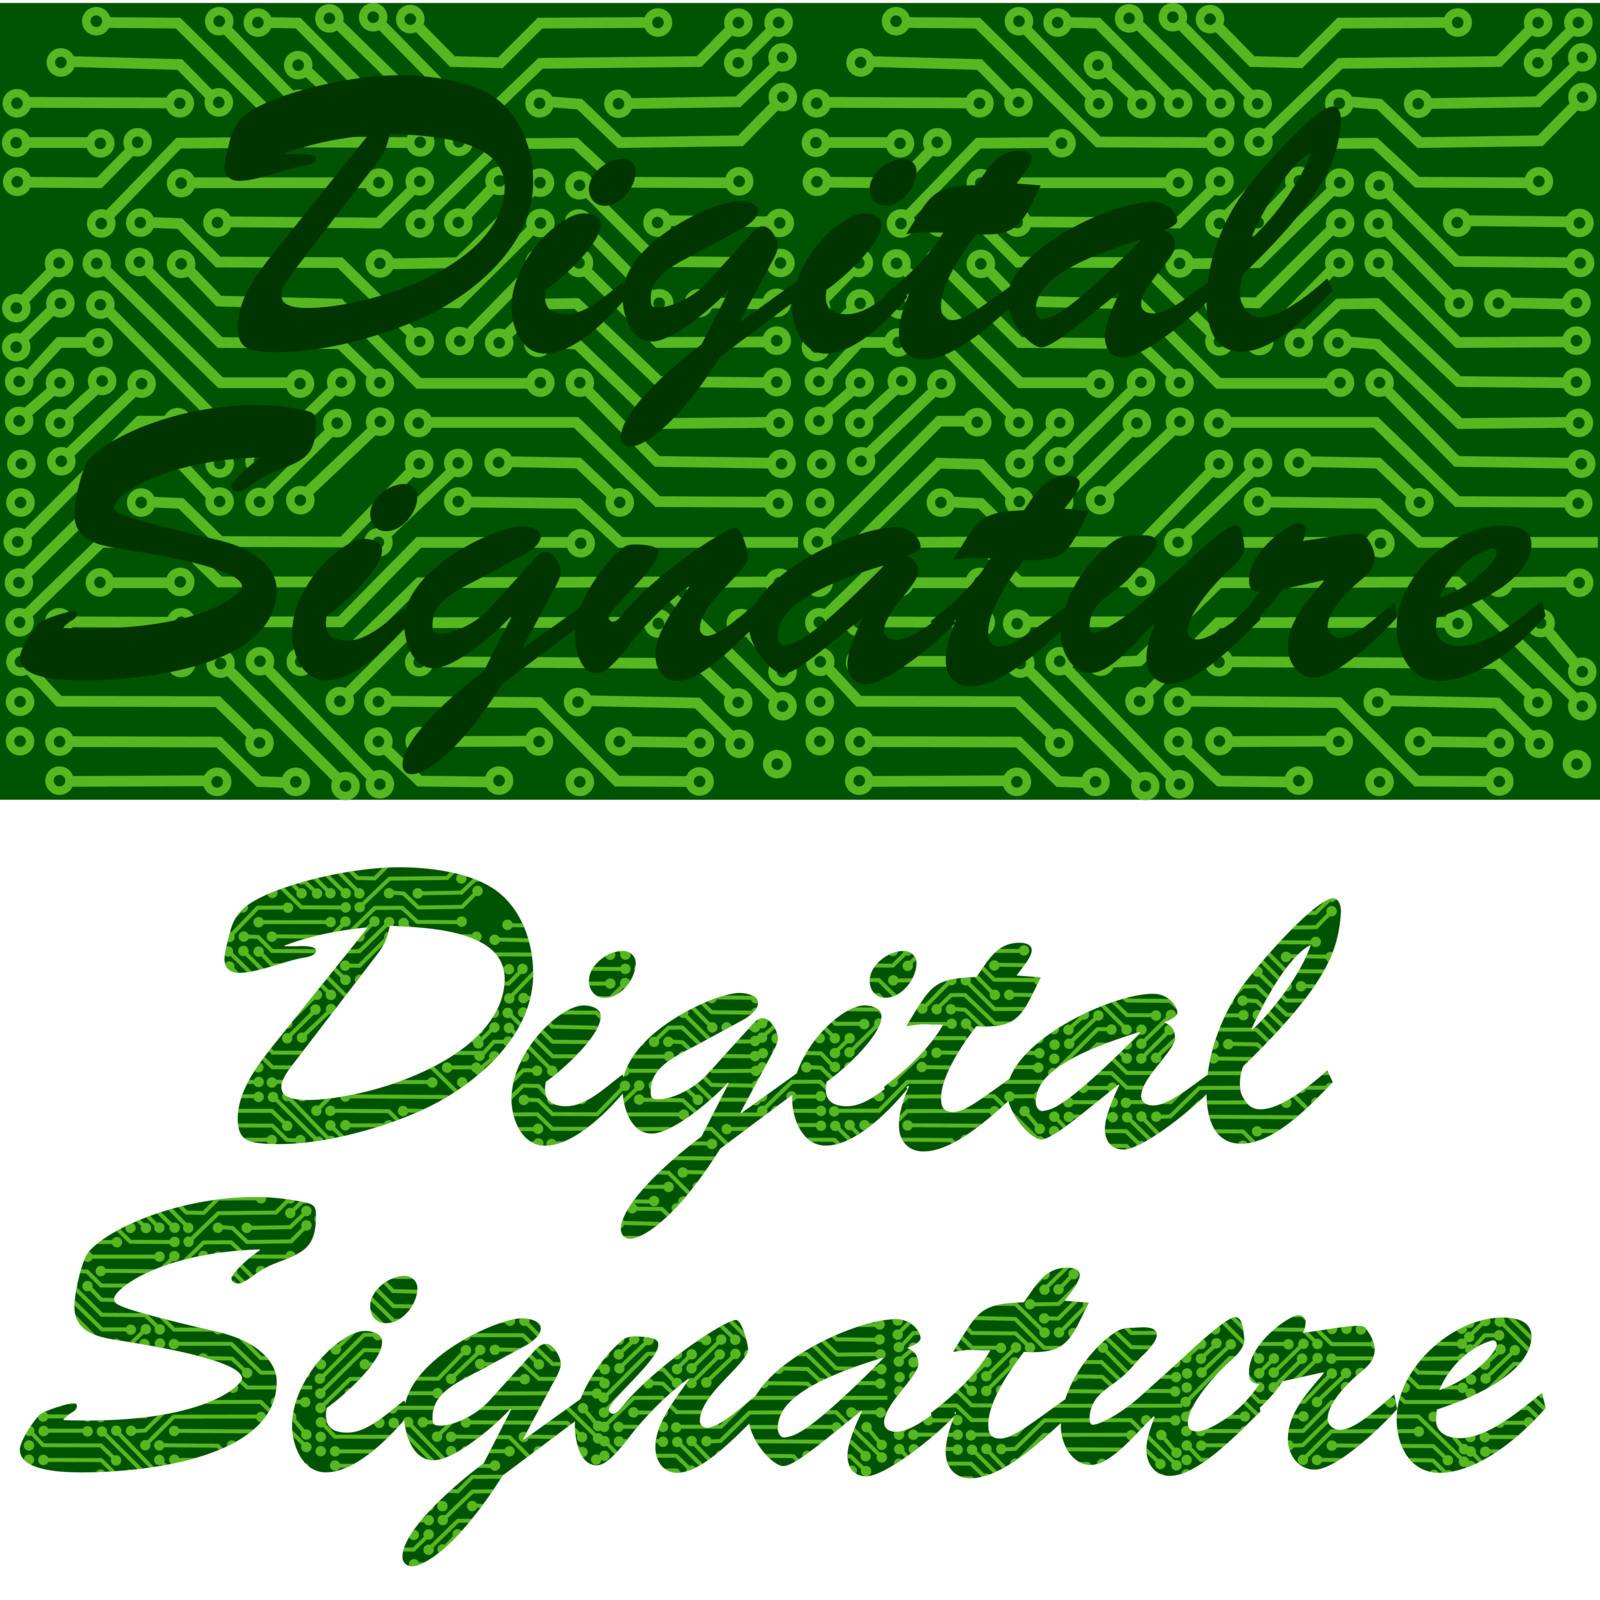 Digital signature by bruno1998